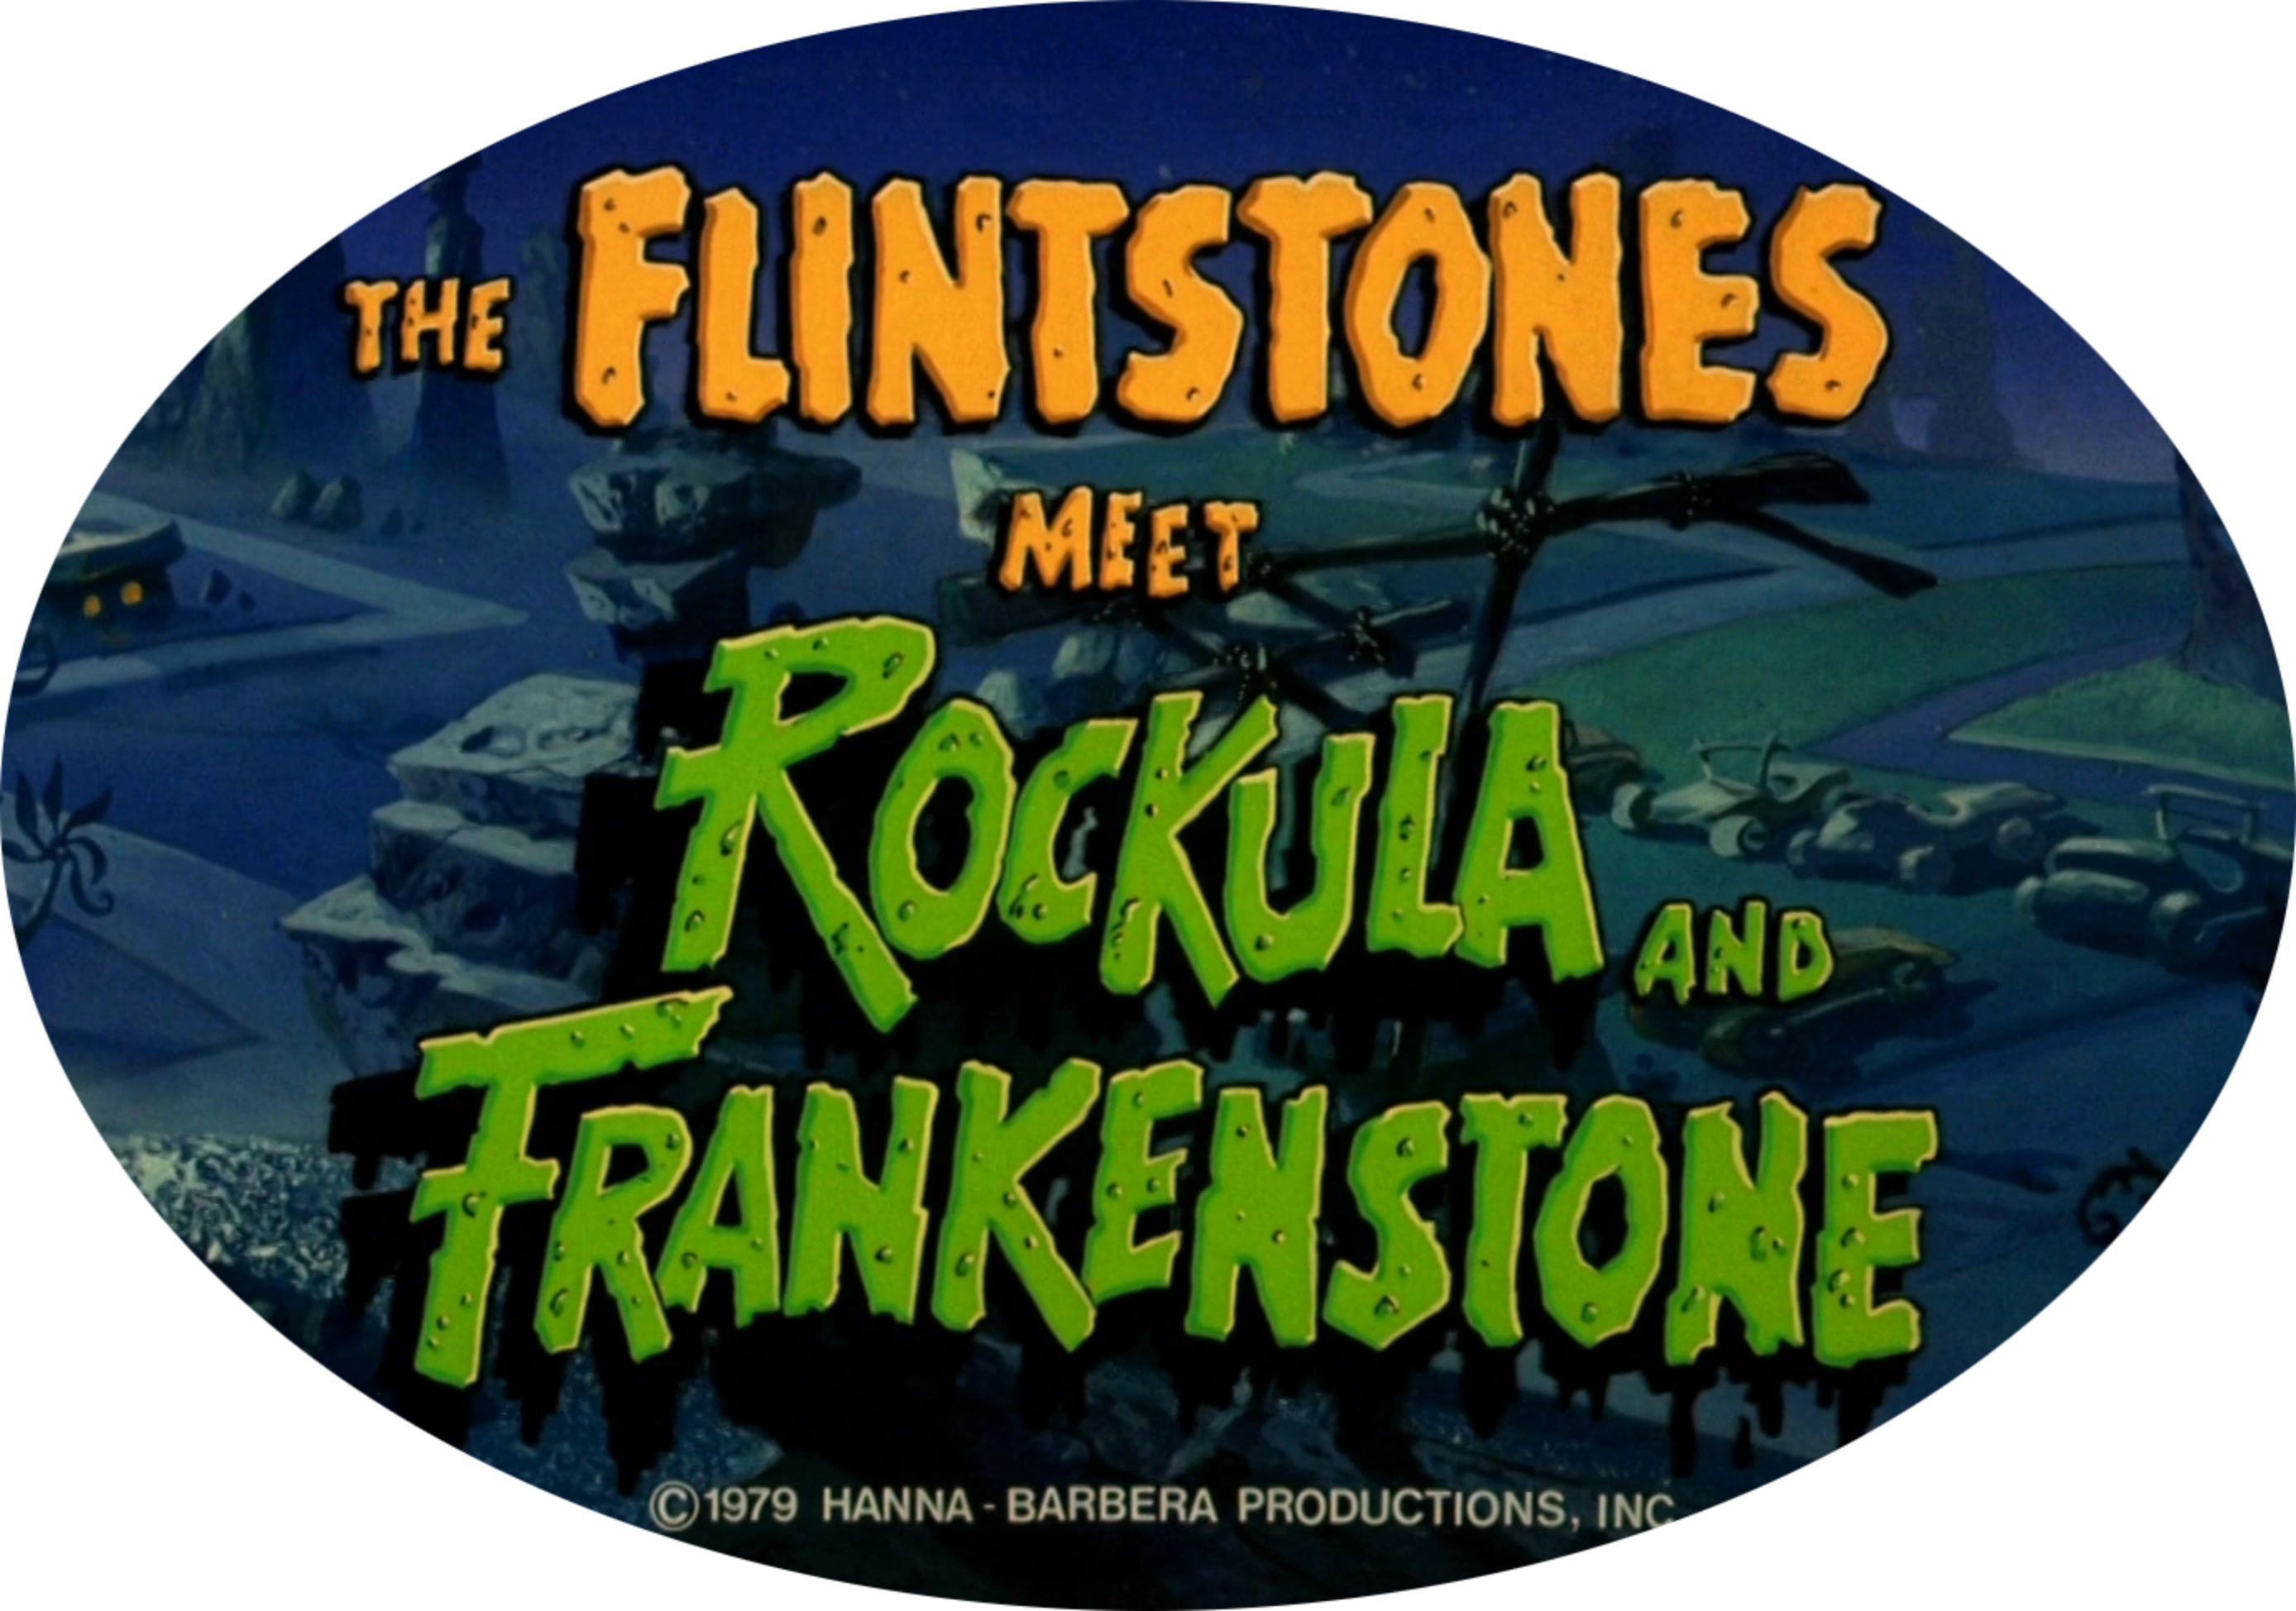 The Flintstones Meet Rockula and Frankenstone (1 DVD Box Set)